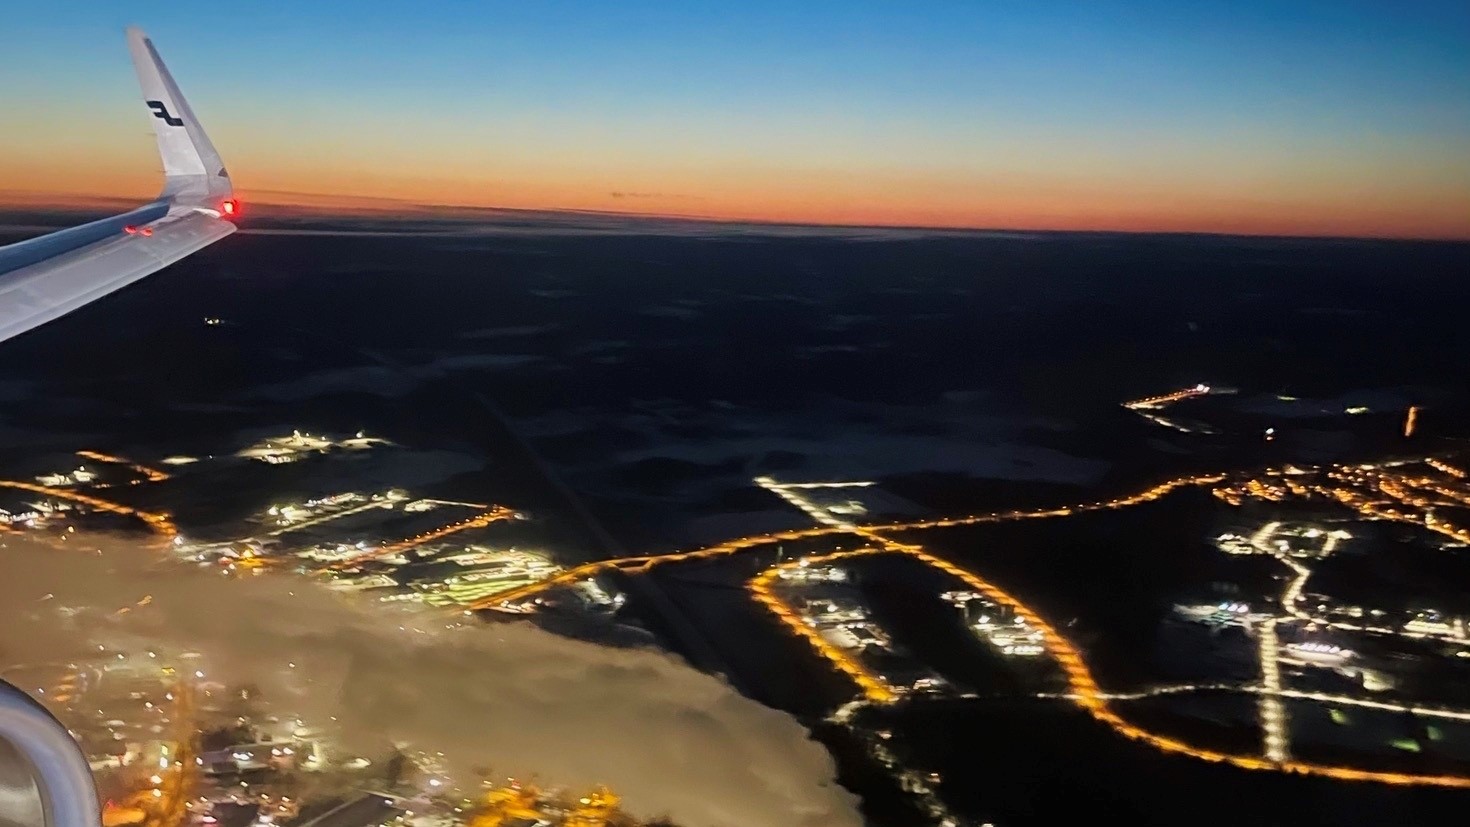 Rovaniemi view from the airplane - Kaat Vandeweyer